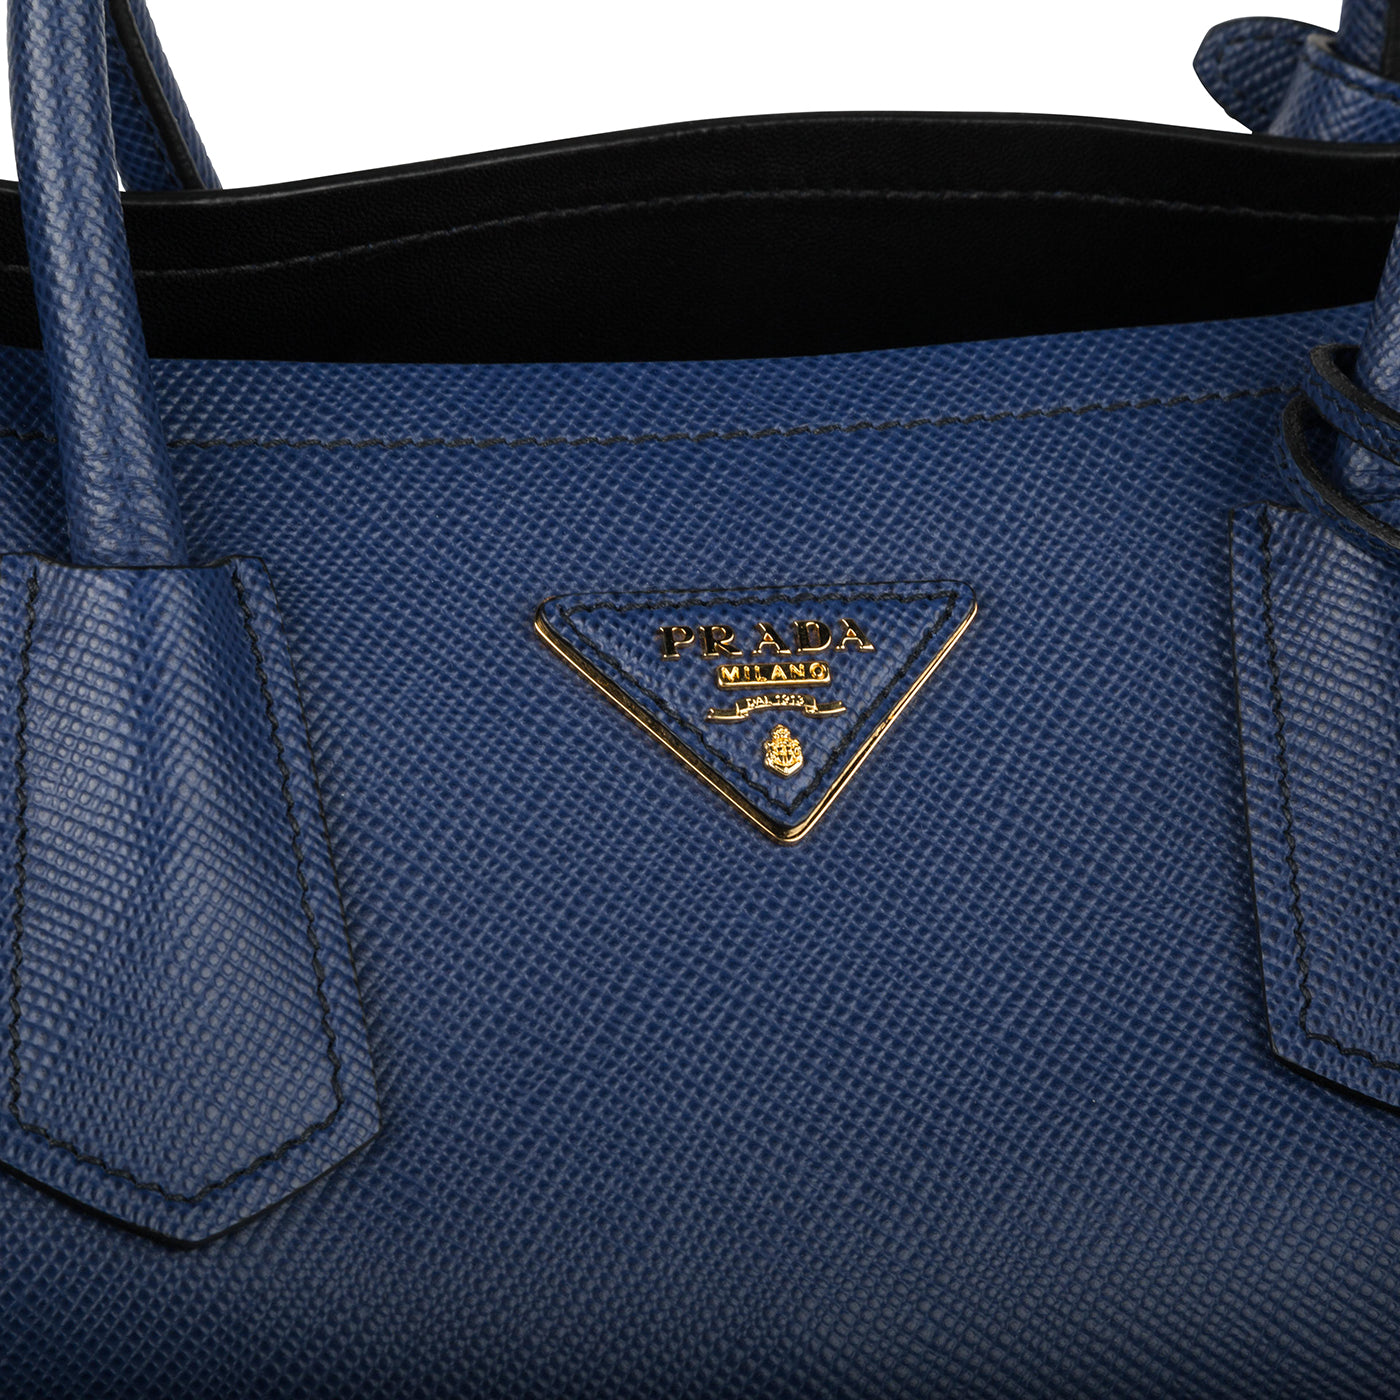 Prada Large Saffiano Cuir Double Tote - Blue Totes, Handbags - PRA900604